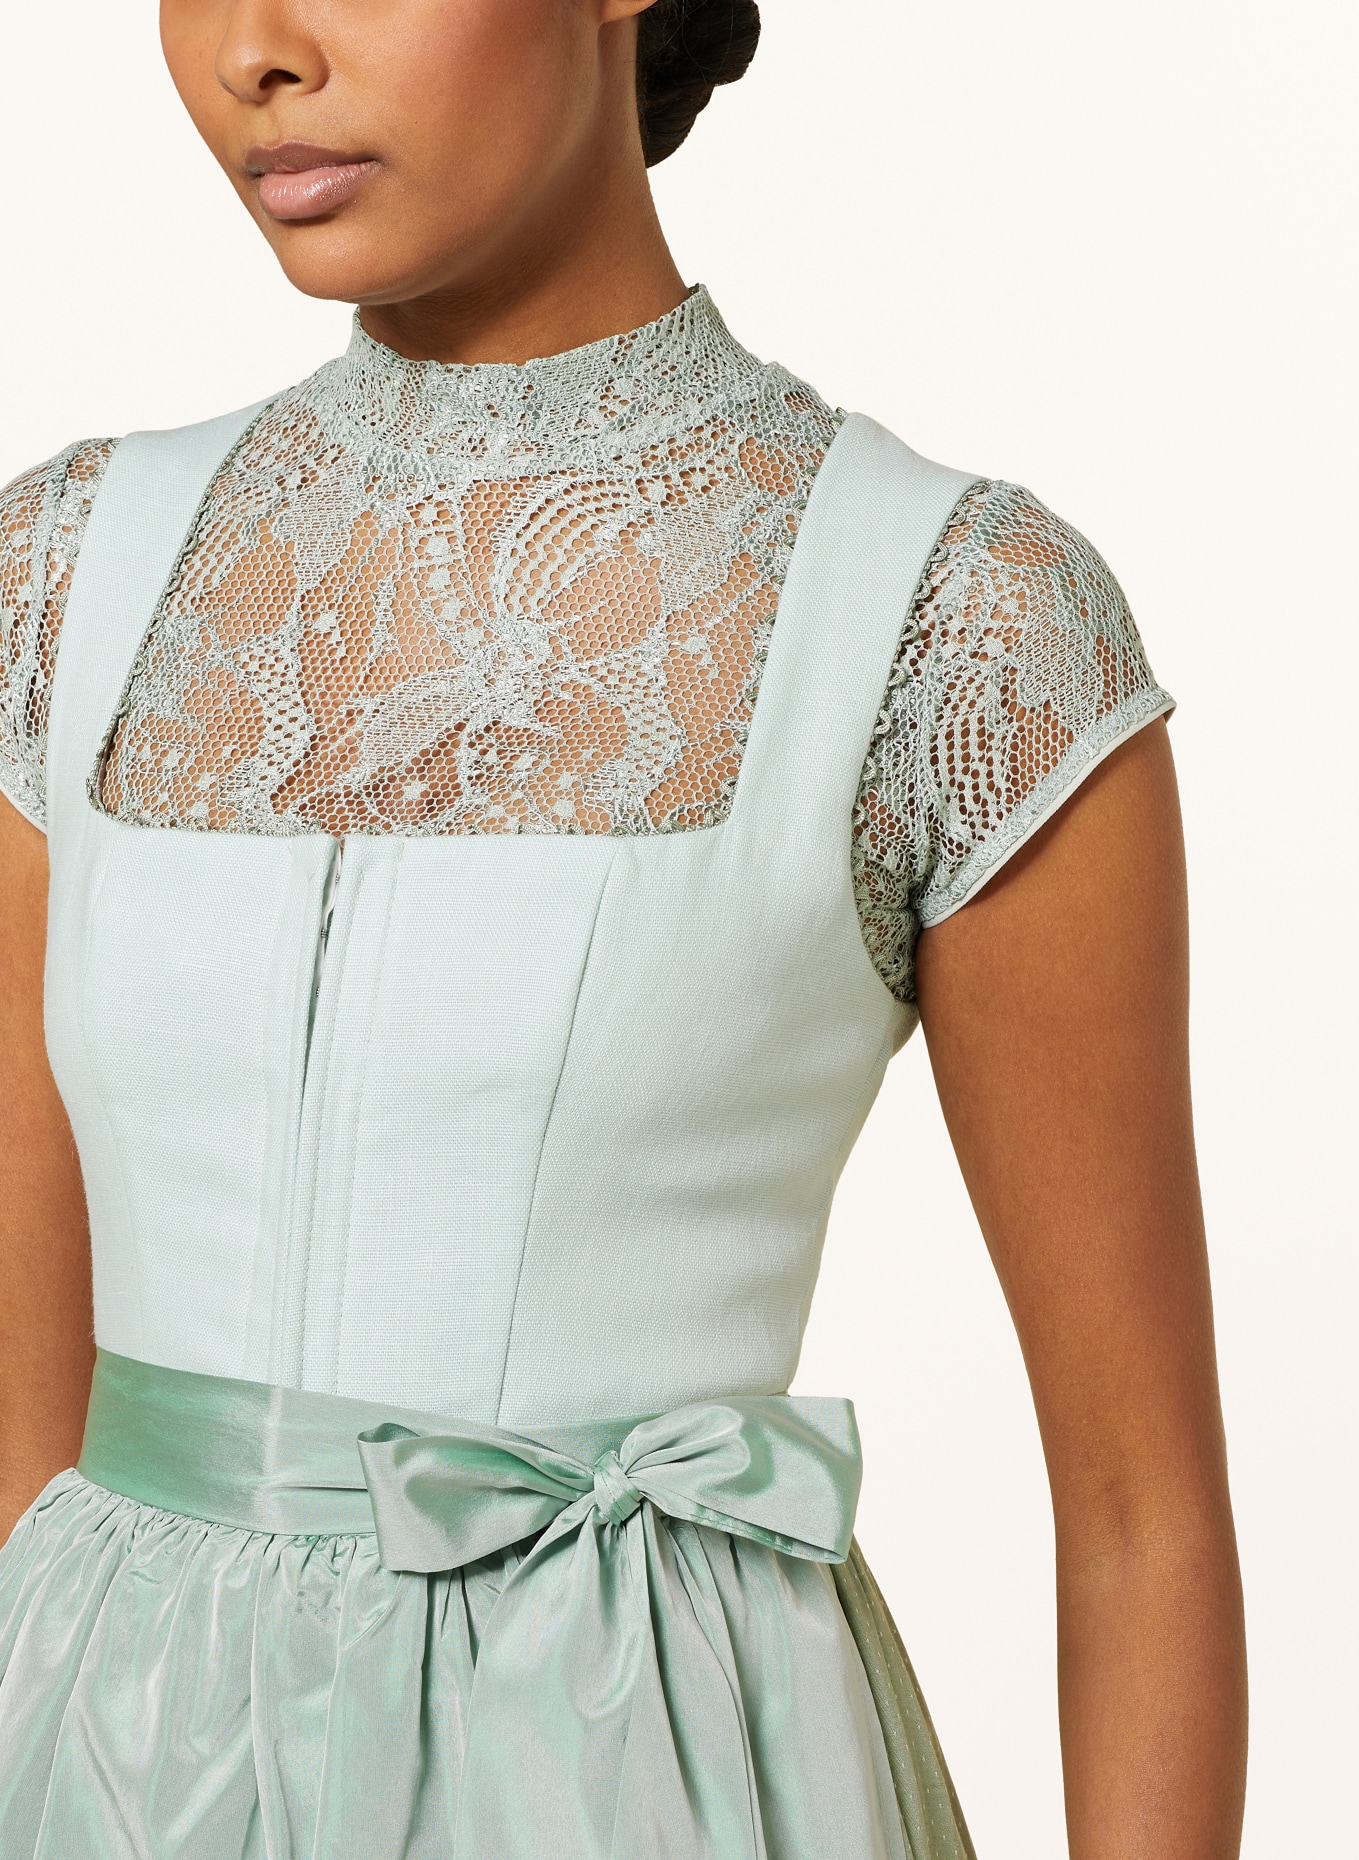 KINGA MATHE Dirndl blouse CHARLOTTE made of lace, Color: MINT (Image 3)